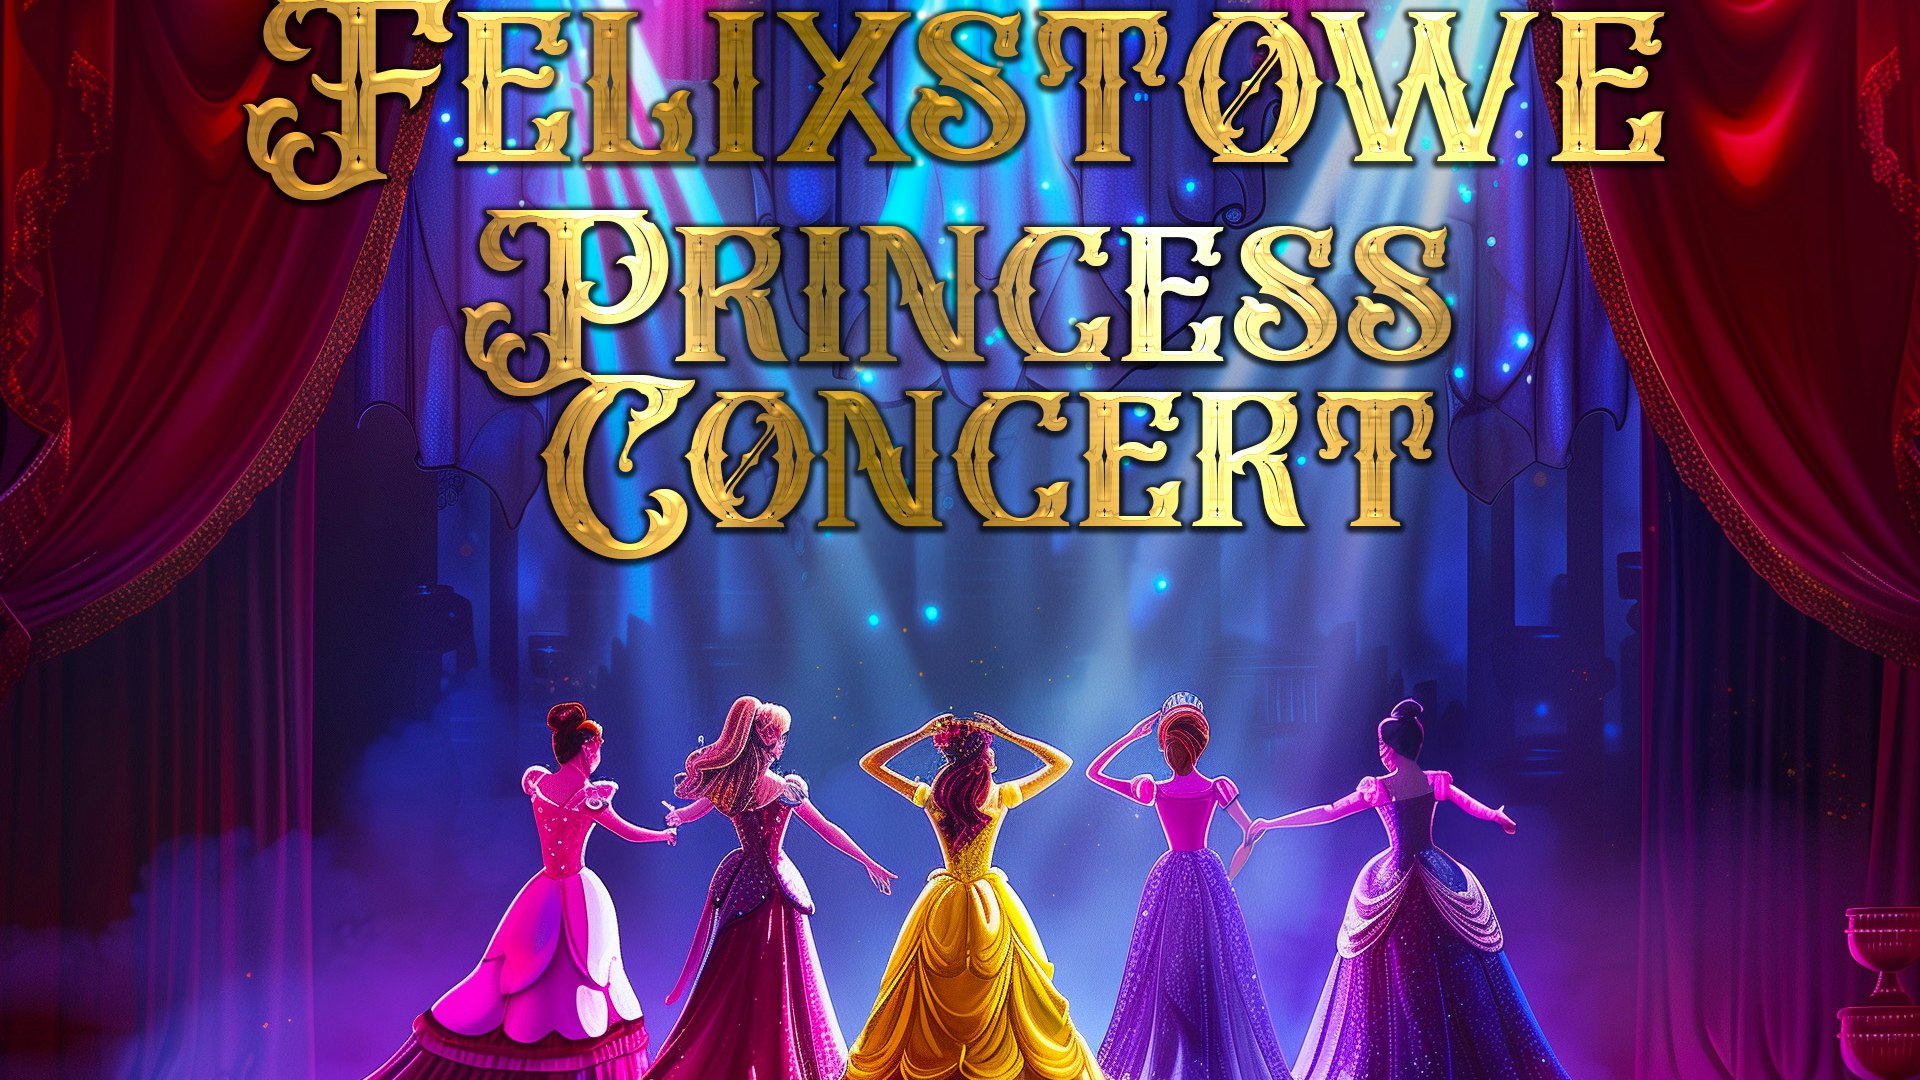 The Princess Concert Comes To Felixstowe✨👑